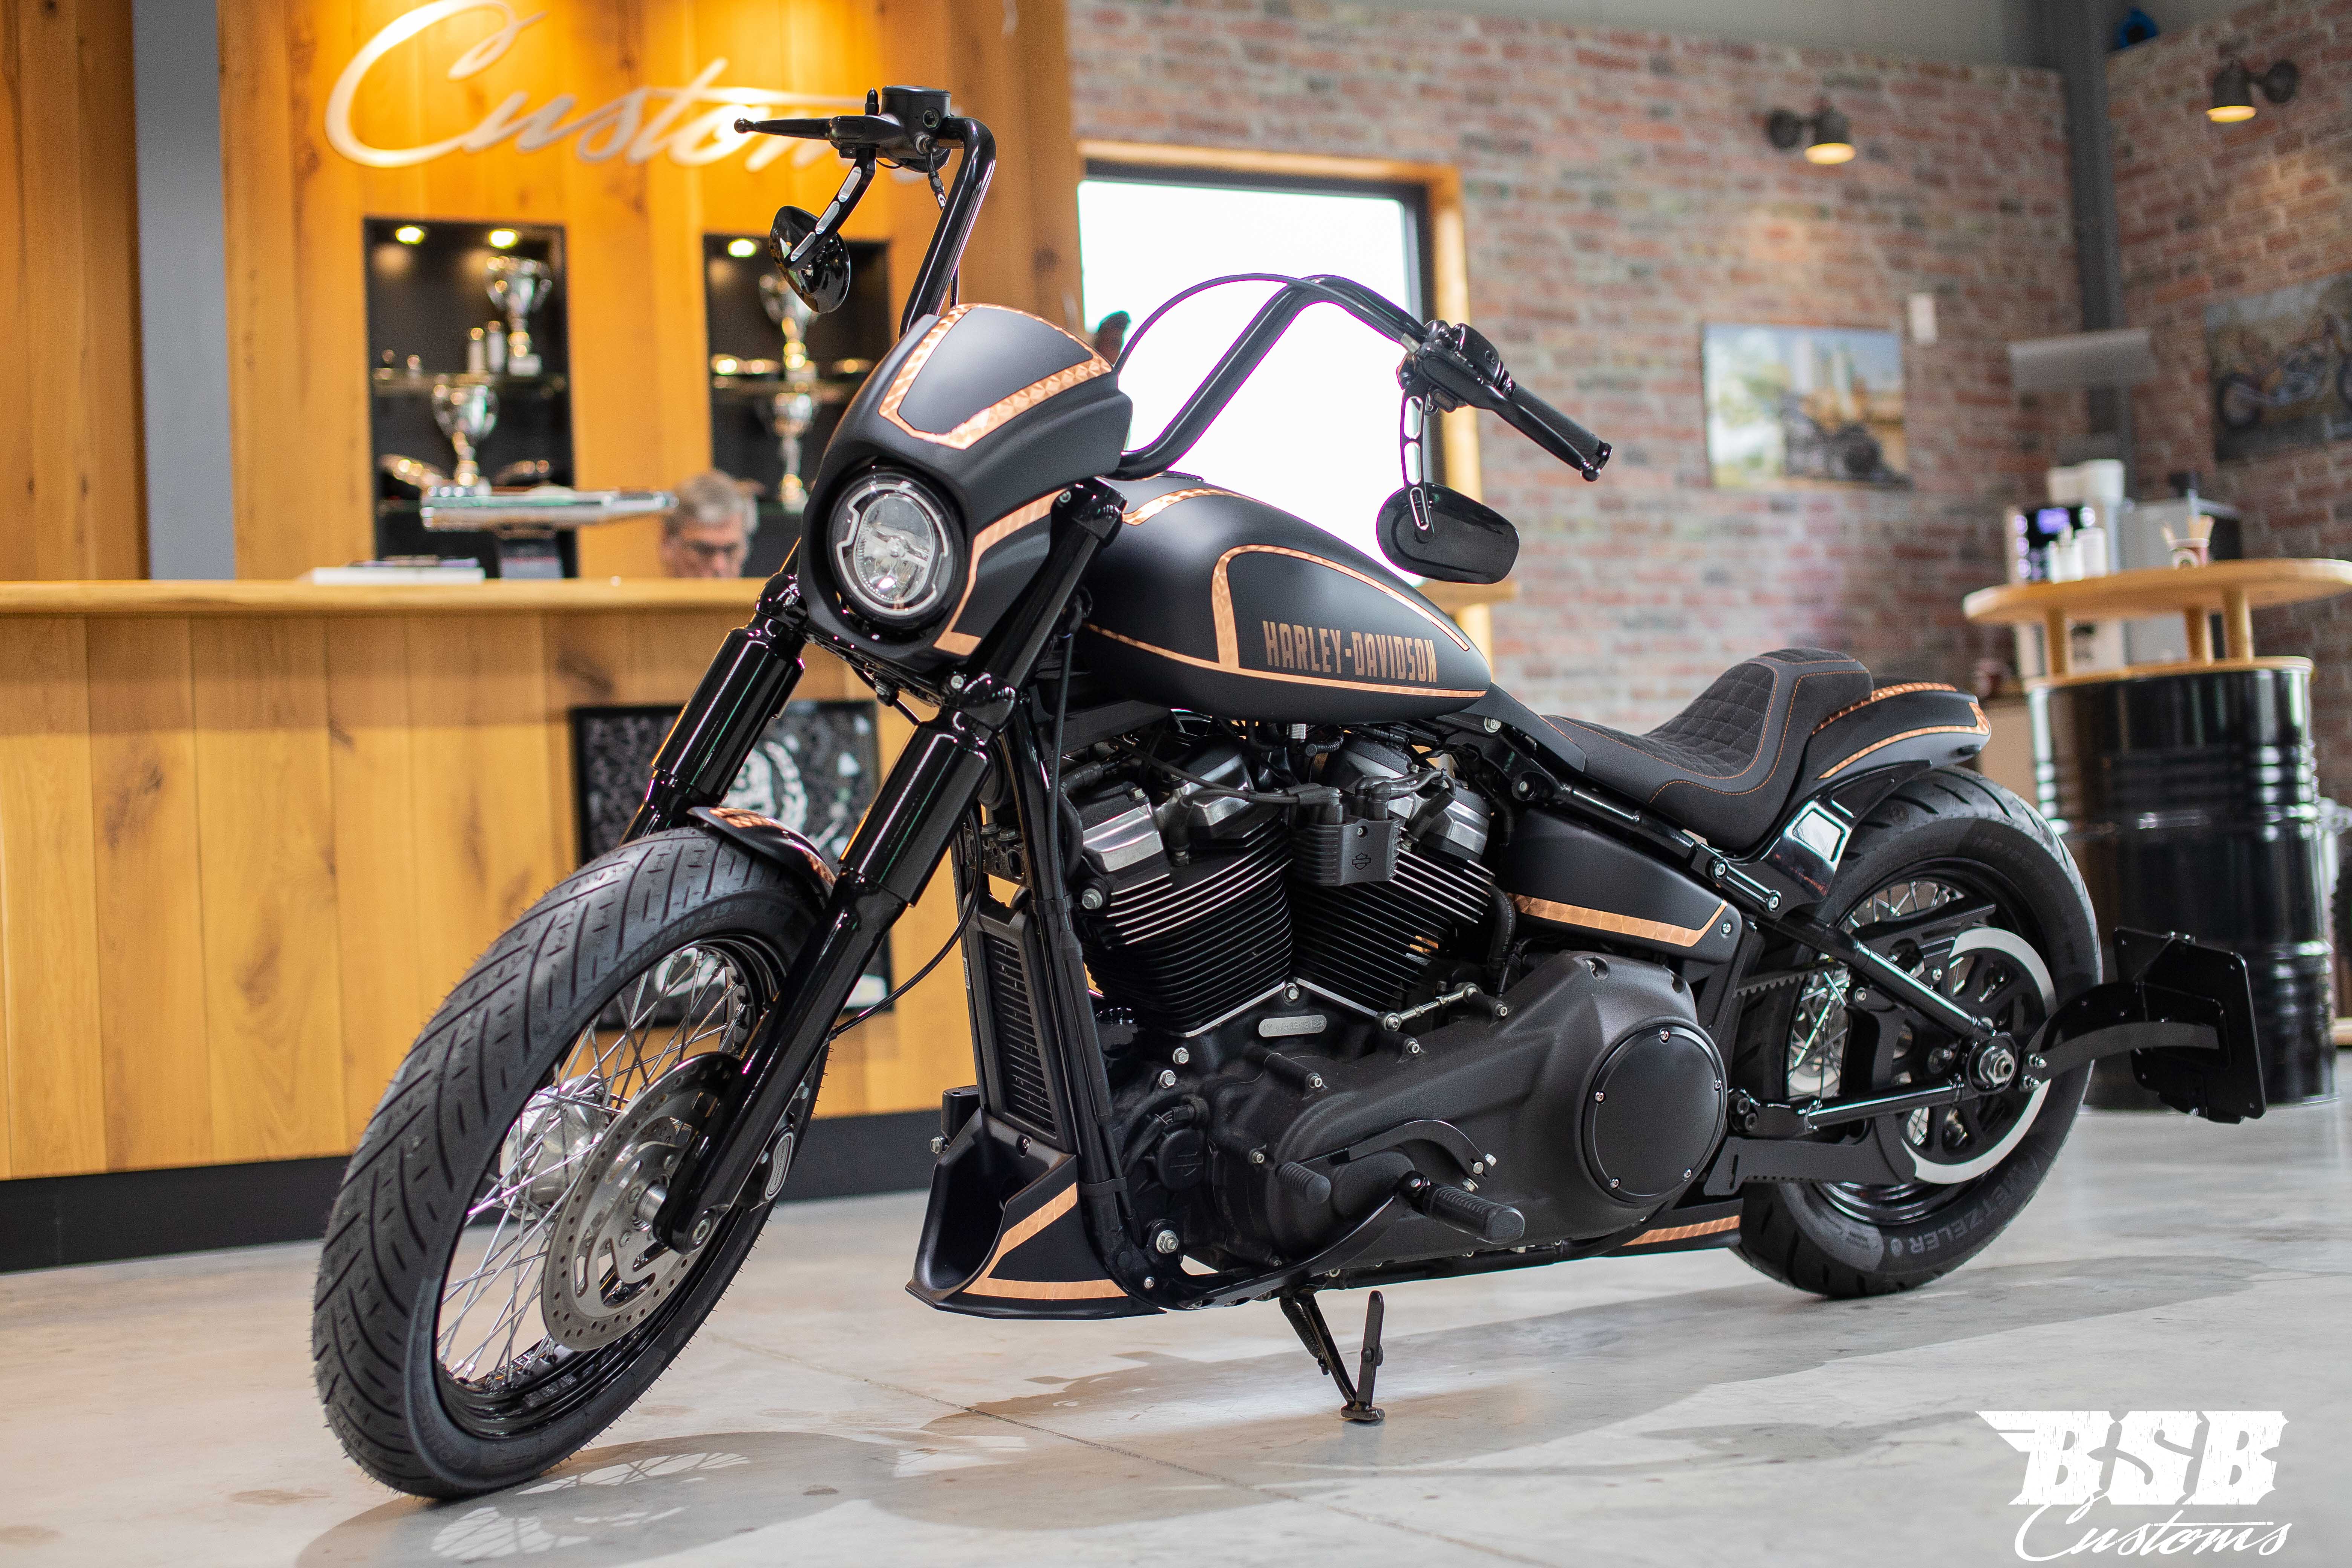 VERKAUFT***2019 Harley Davidson FXBB Street Bob Milwauke-Eight customized by BSB Customs